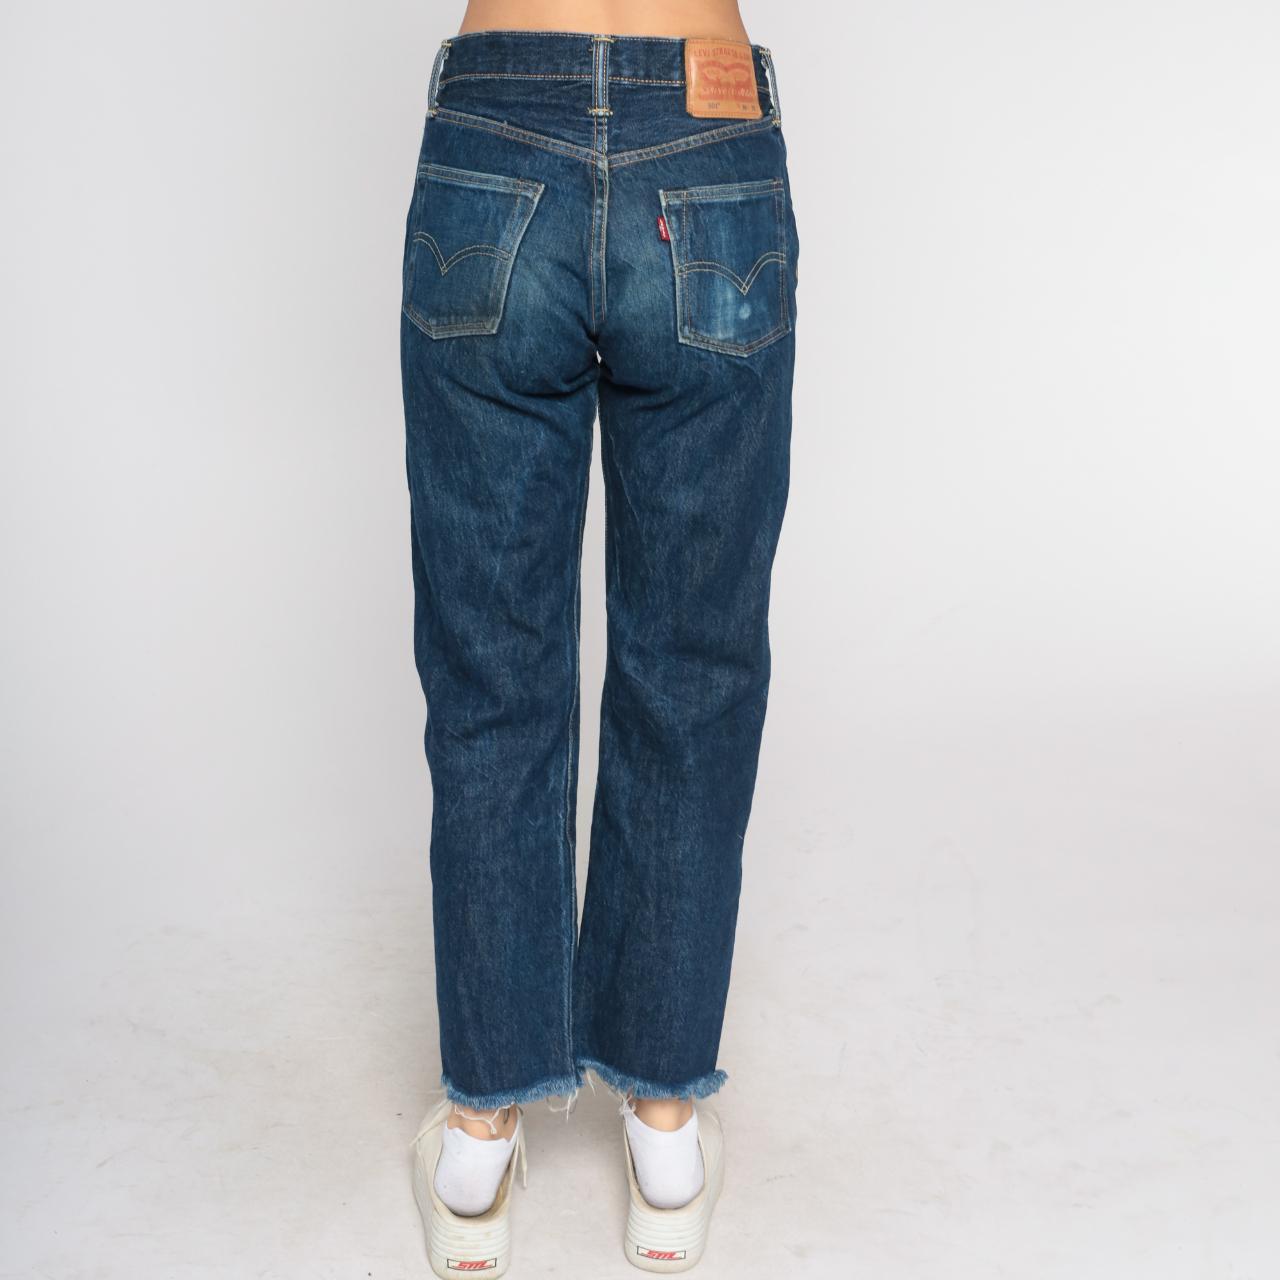 🧡Modern Levi's 501 White Oak Cone denim jeans with a... - Depop